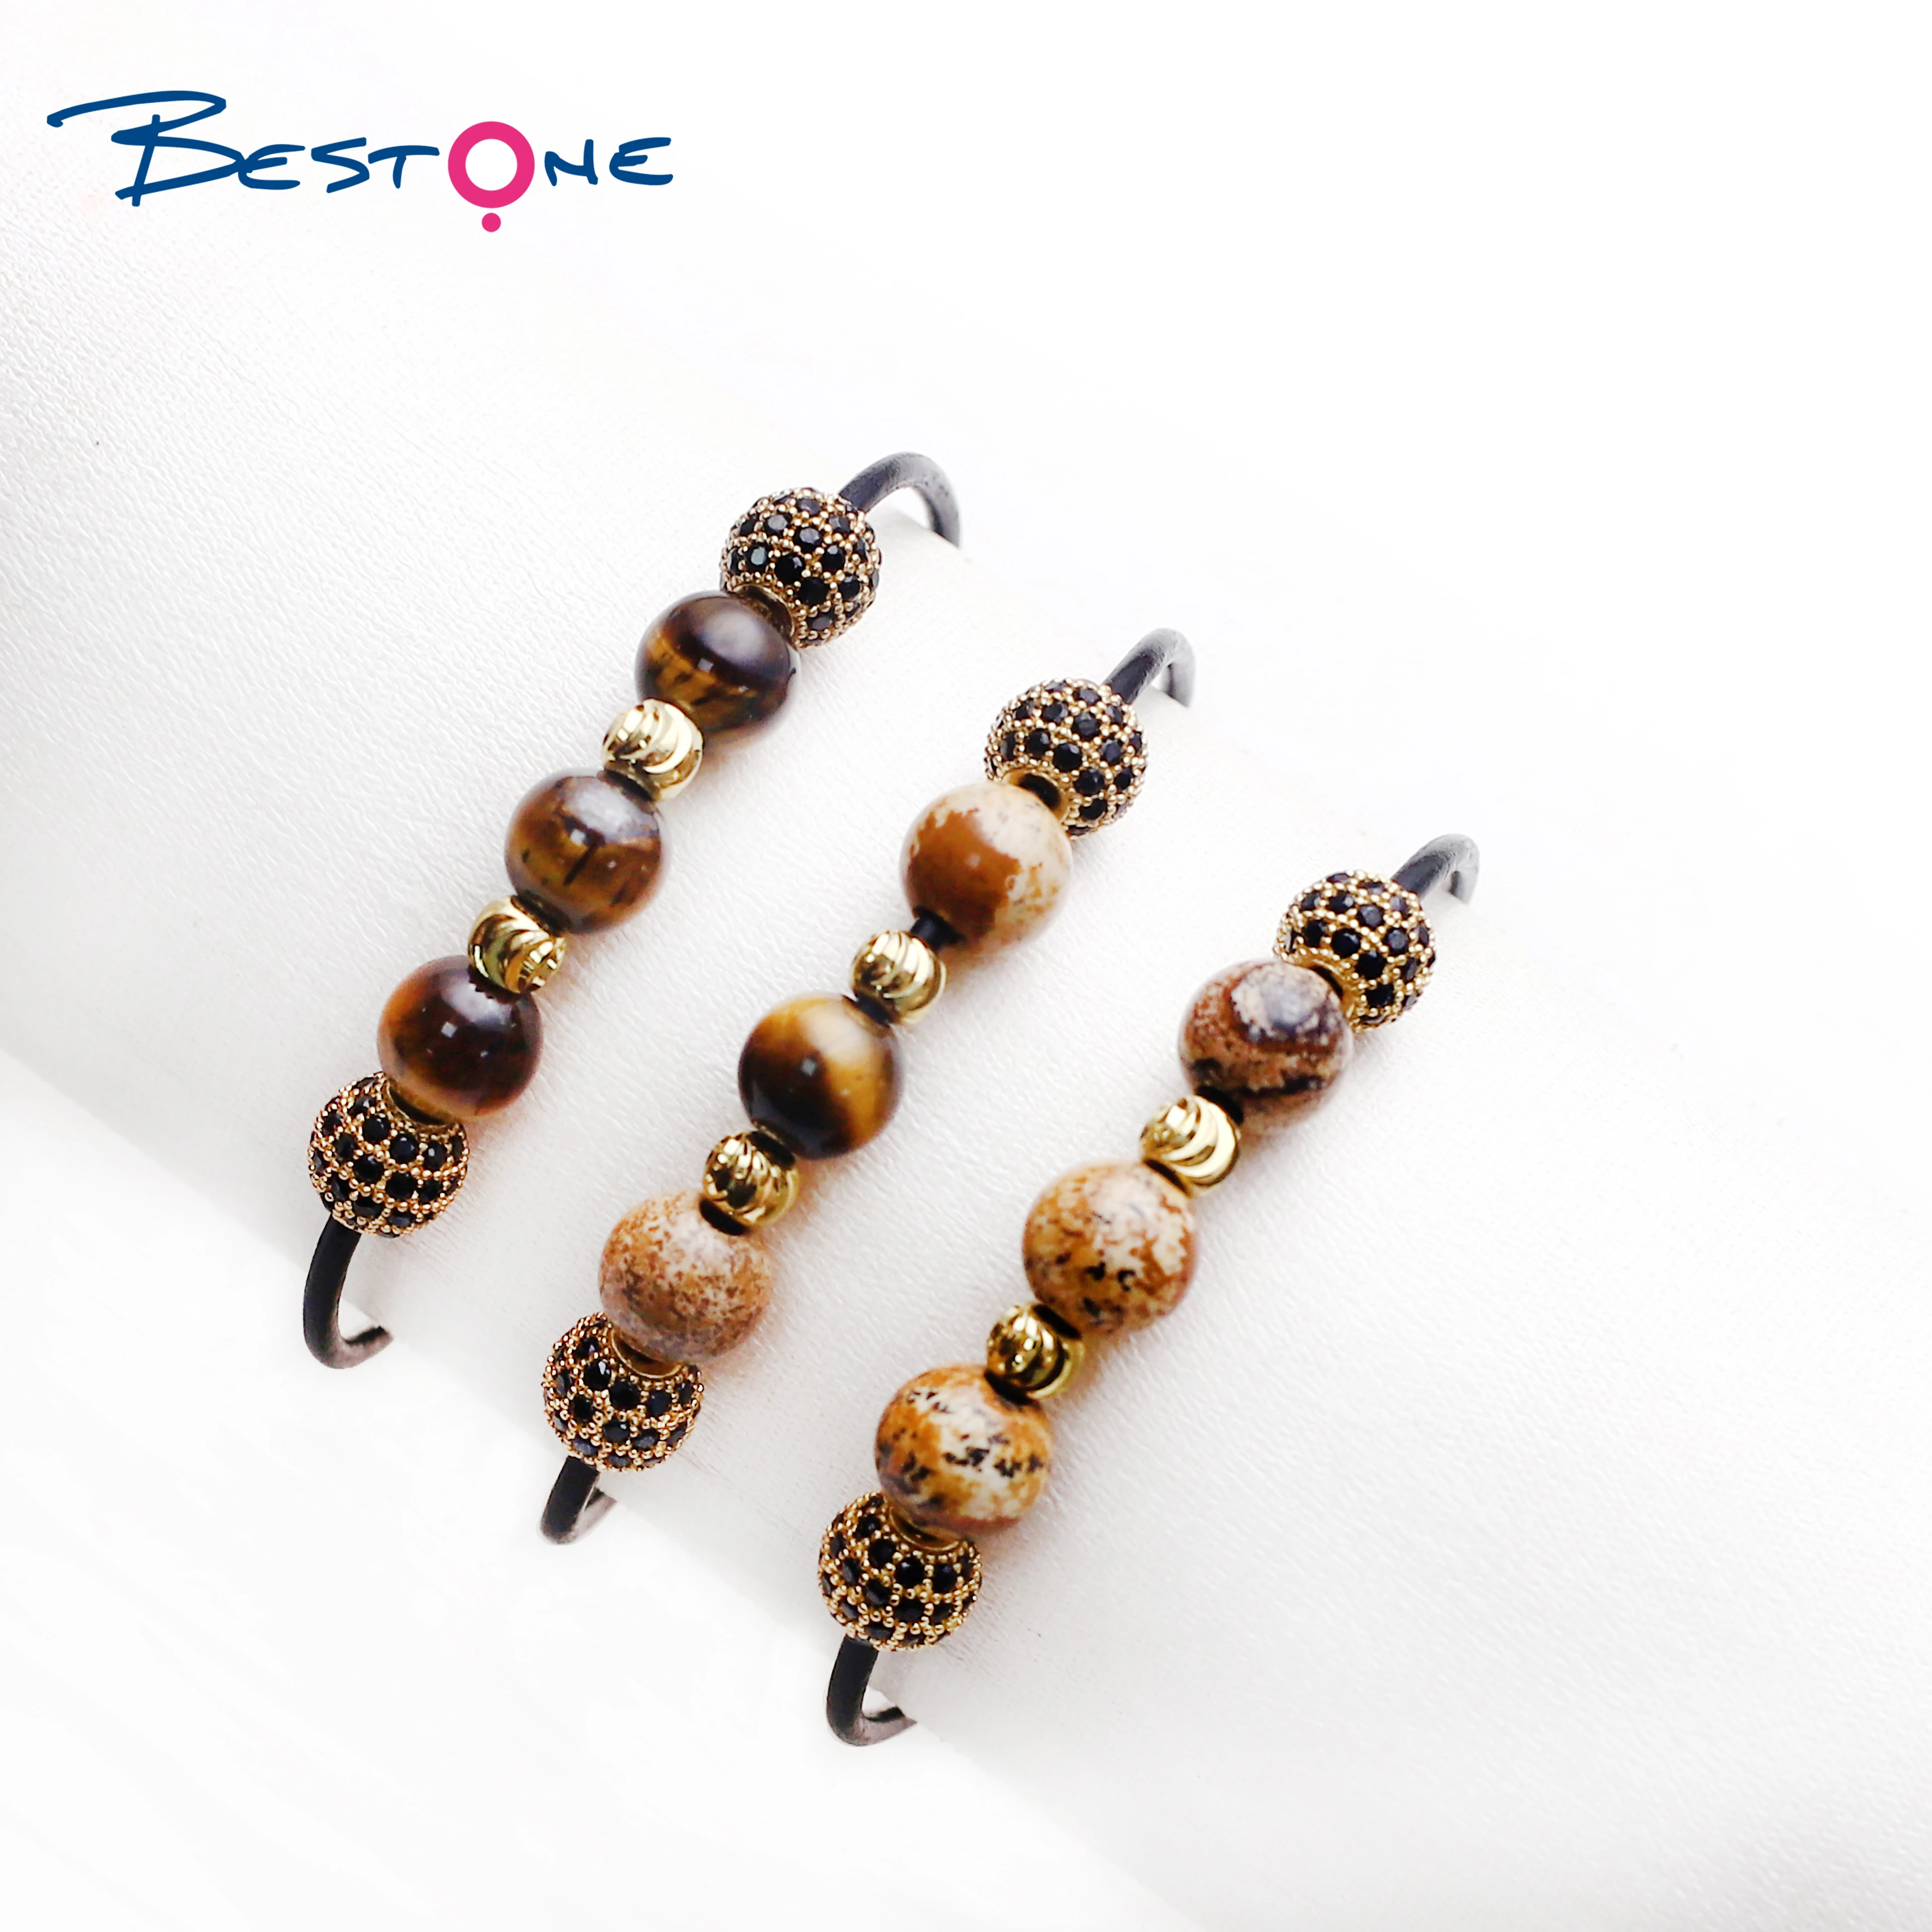 

Bestone DIY Handmade Fashion Semi-Precious Beads Rope Bracelet Natural Gemstone Adjustable Beads Bracelet for Women